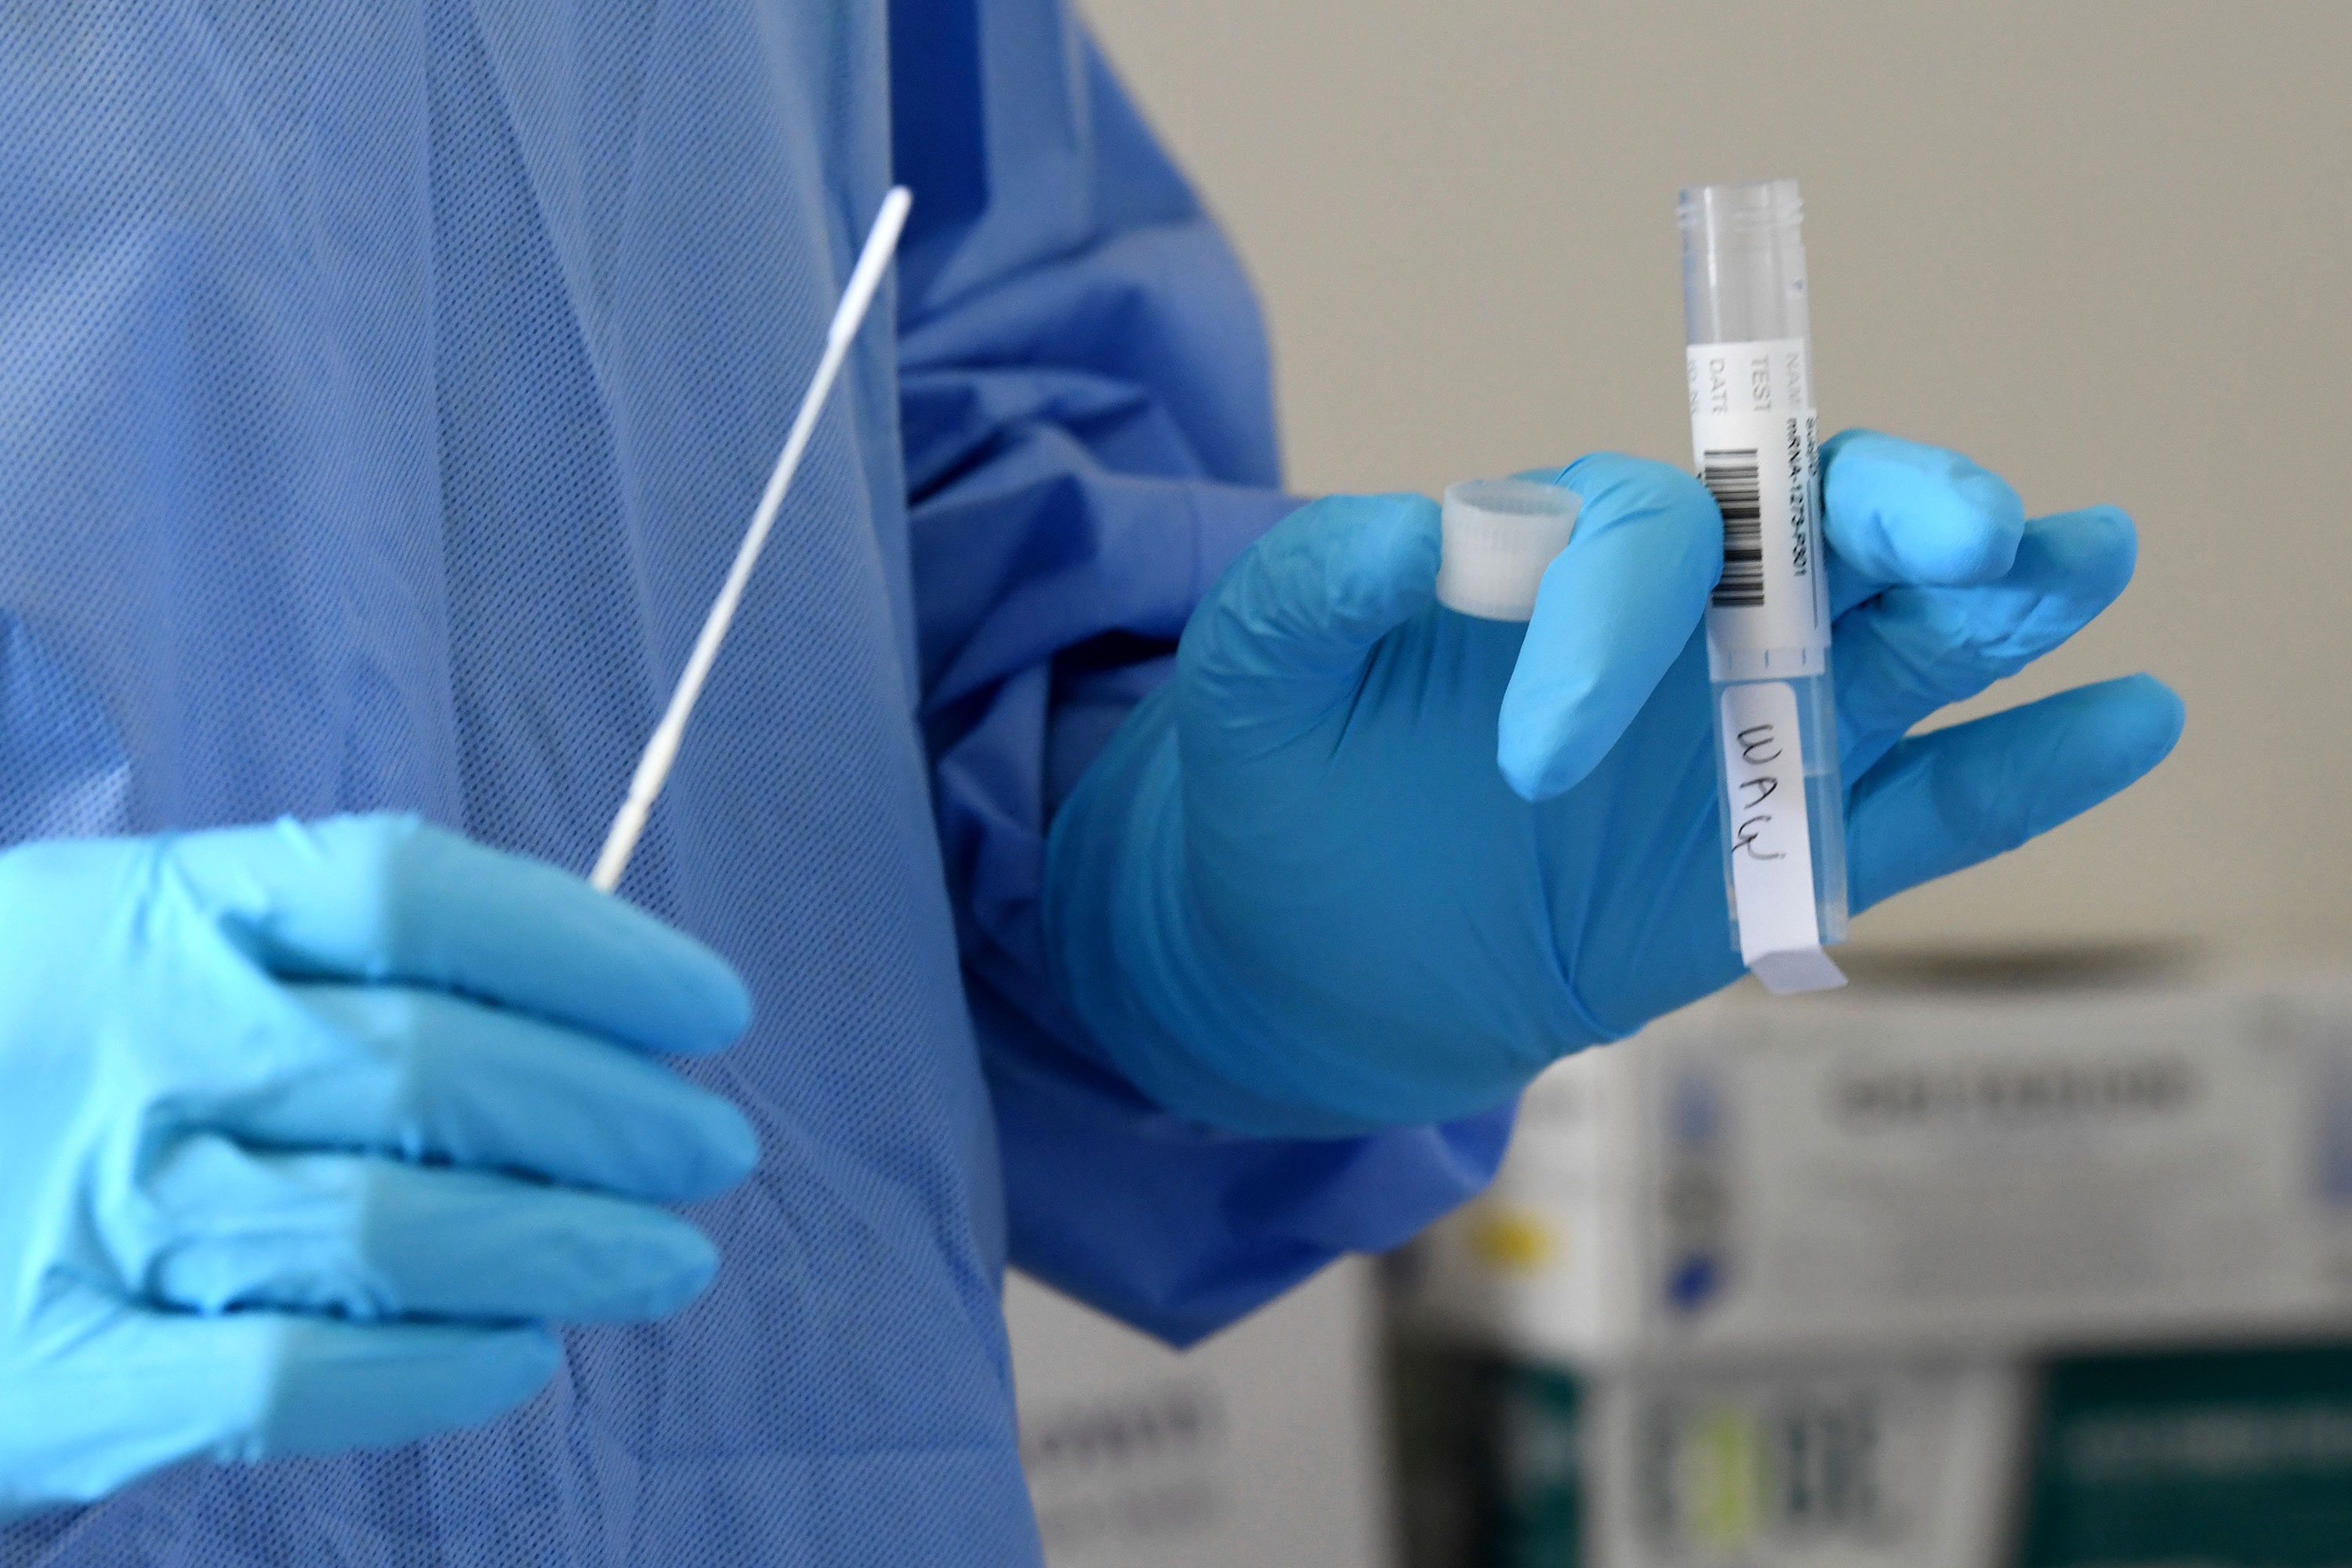 A University of Miami Miller School of Medicine nurse prepares a Covid-19 test on September 2 in Miami, Florida.